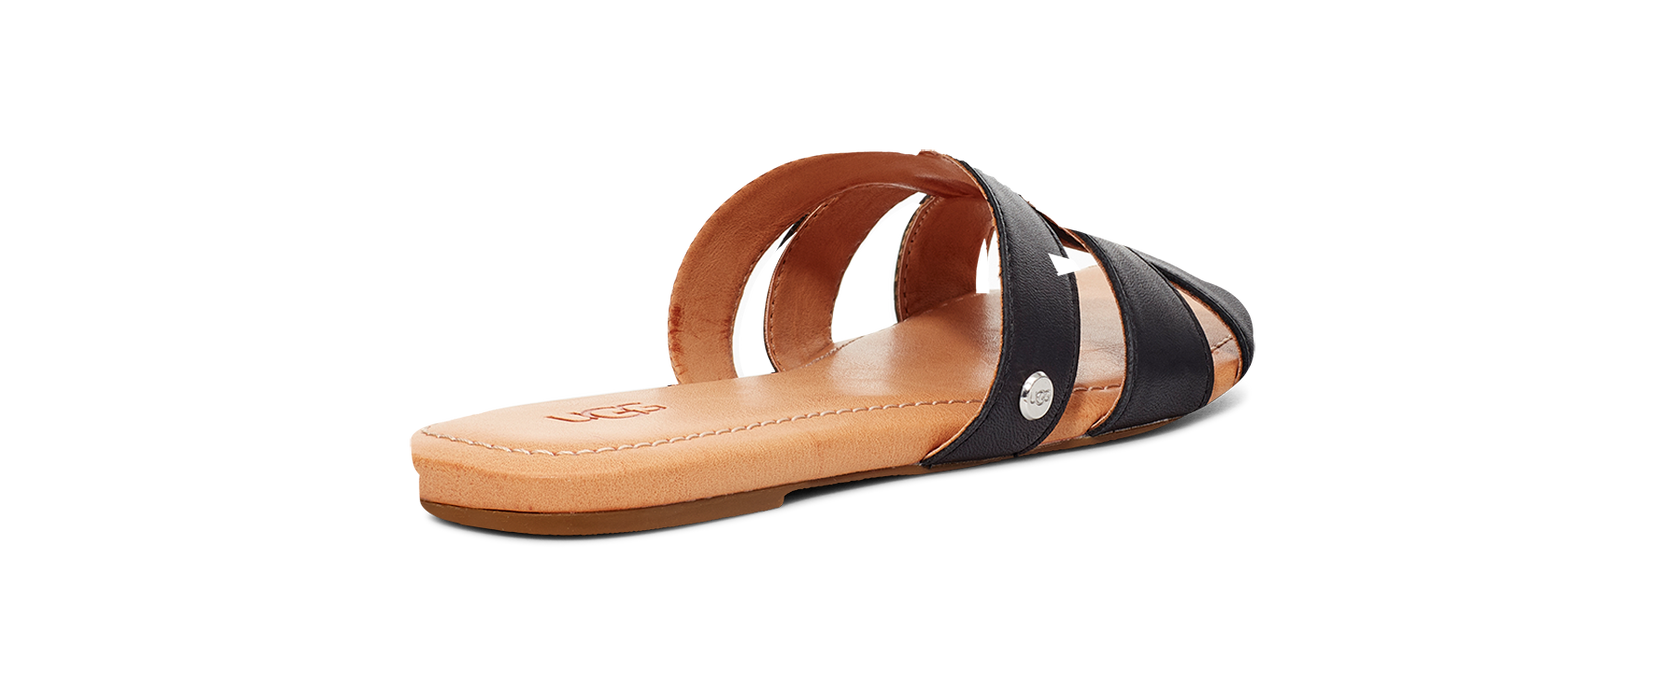 UGG Teague Leather Sandals